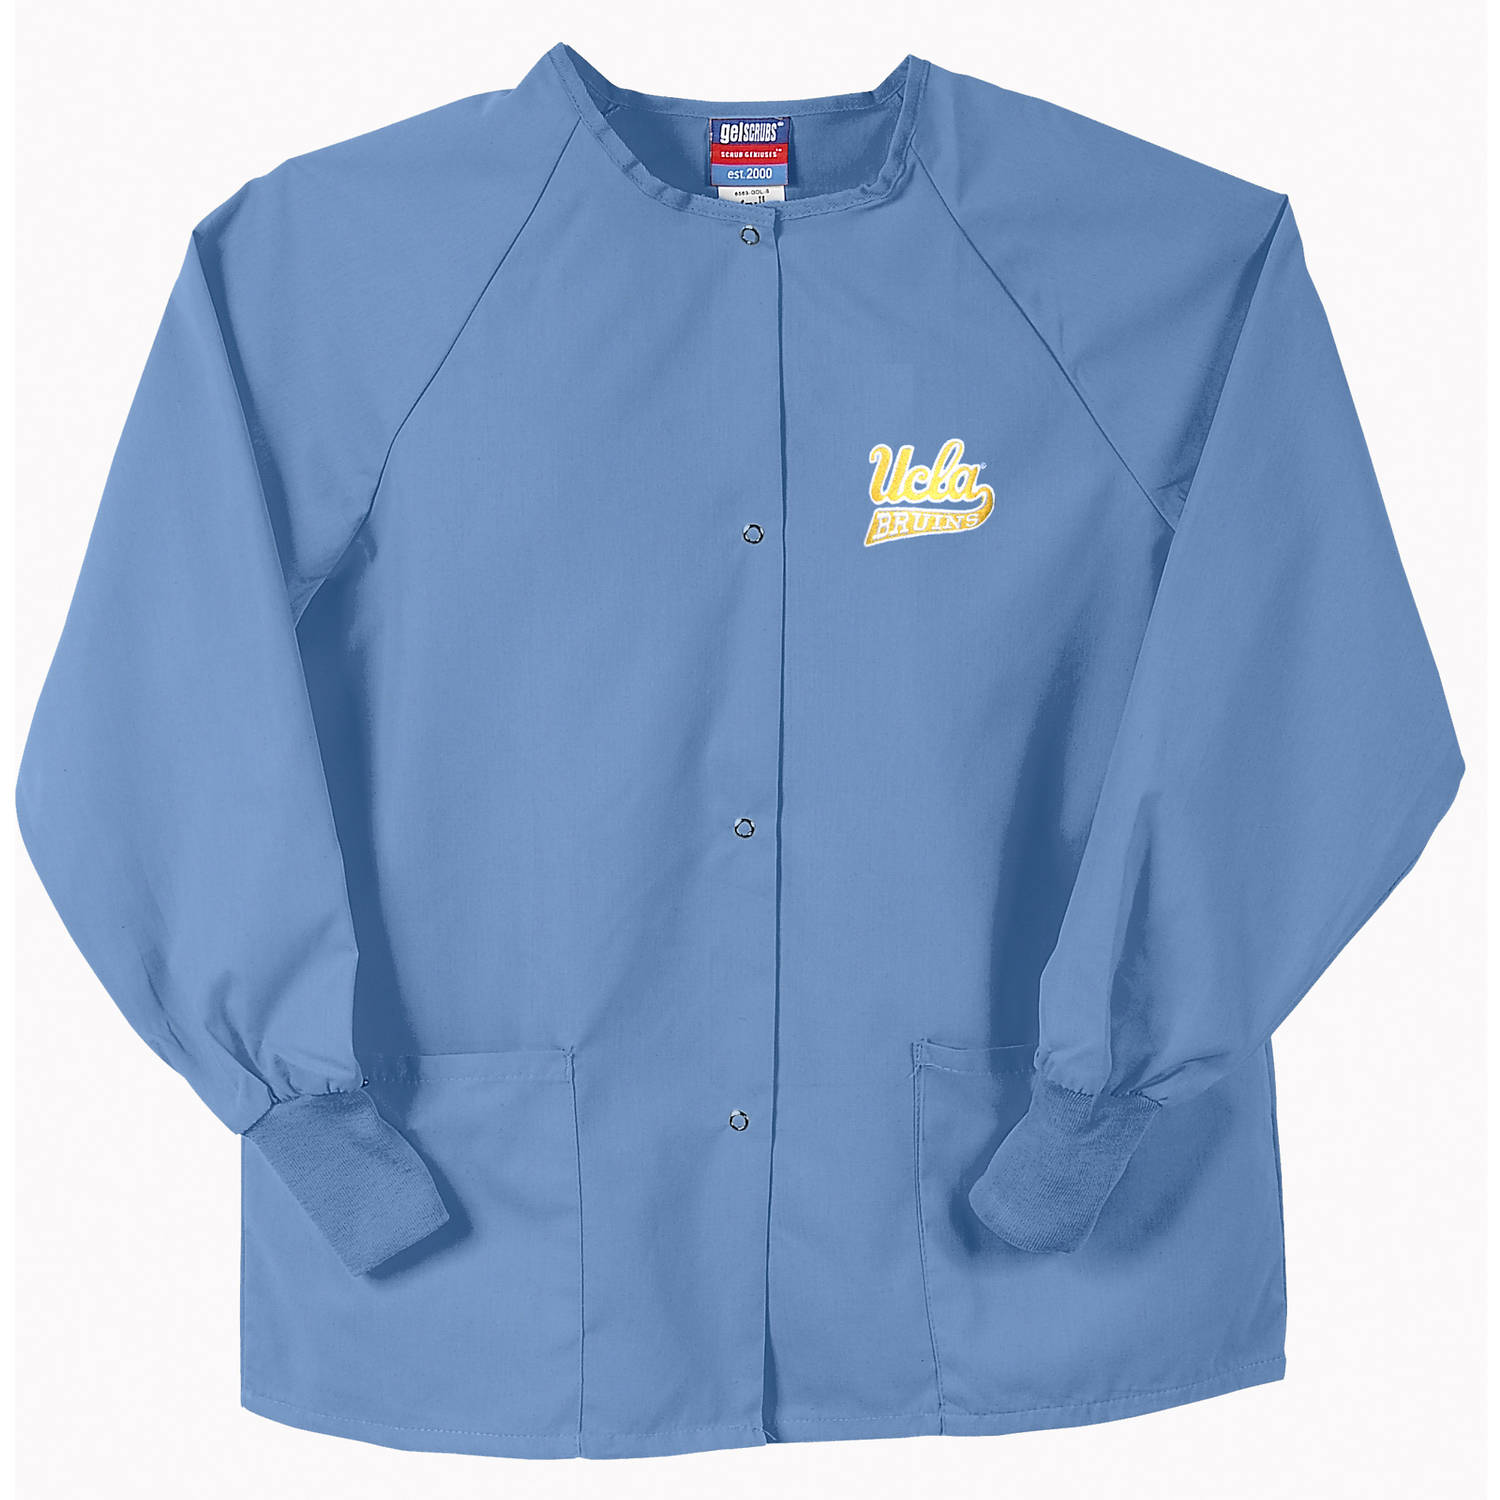 NCAA Crimson Nursing Jacket - University of California Bruins - UCLA - image 1 of 1